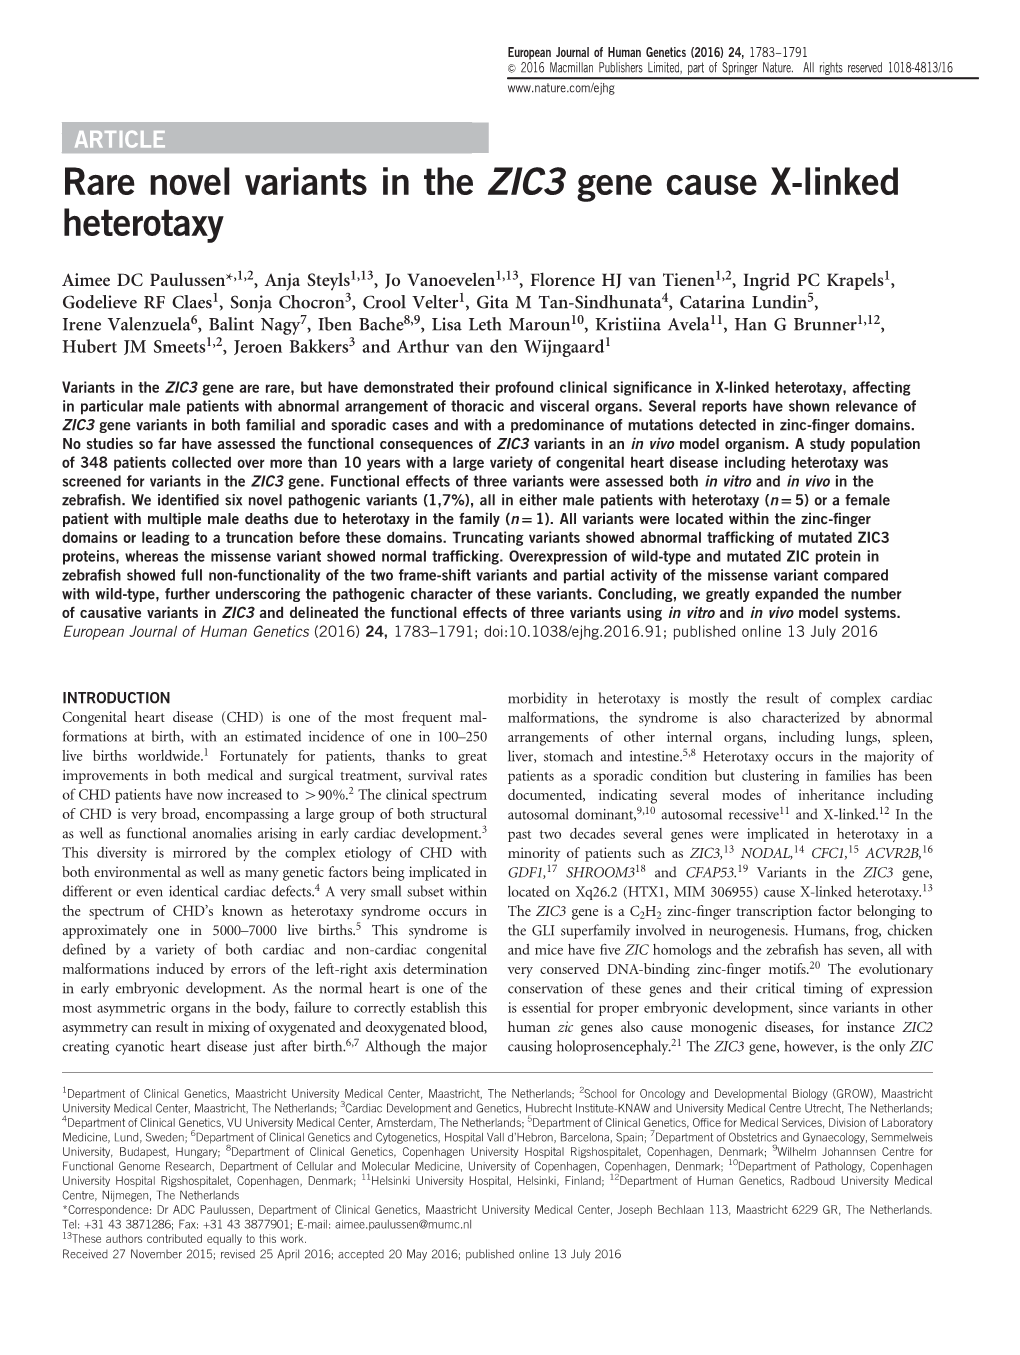 Rare Novel Variants in the ZIC3 Gene Cause X-Linked Heterotaxy